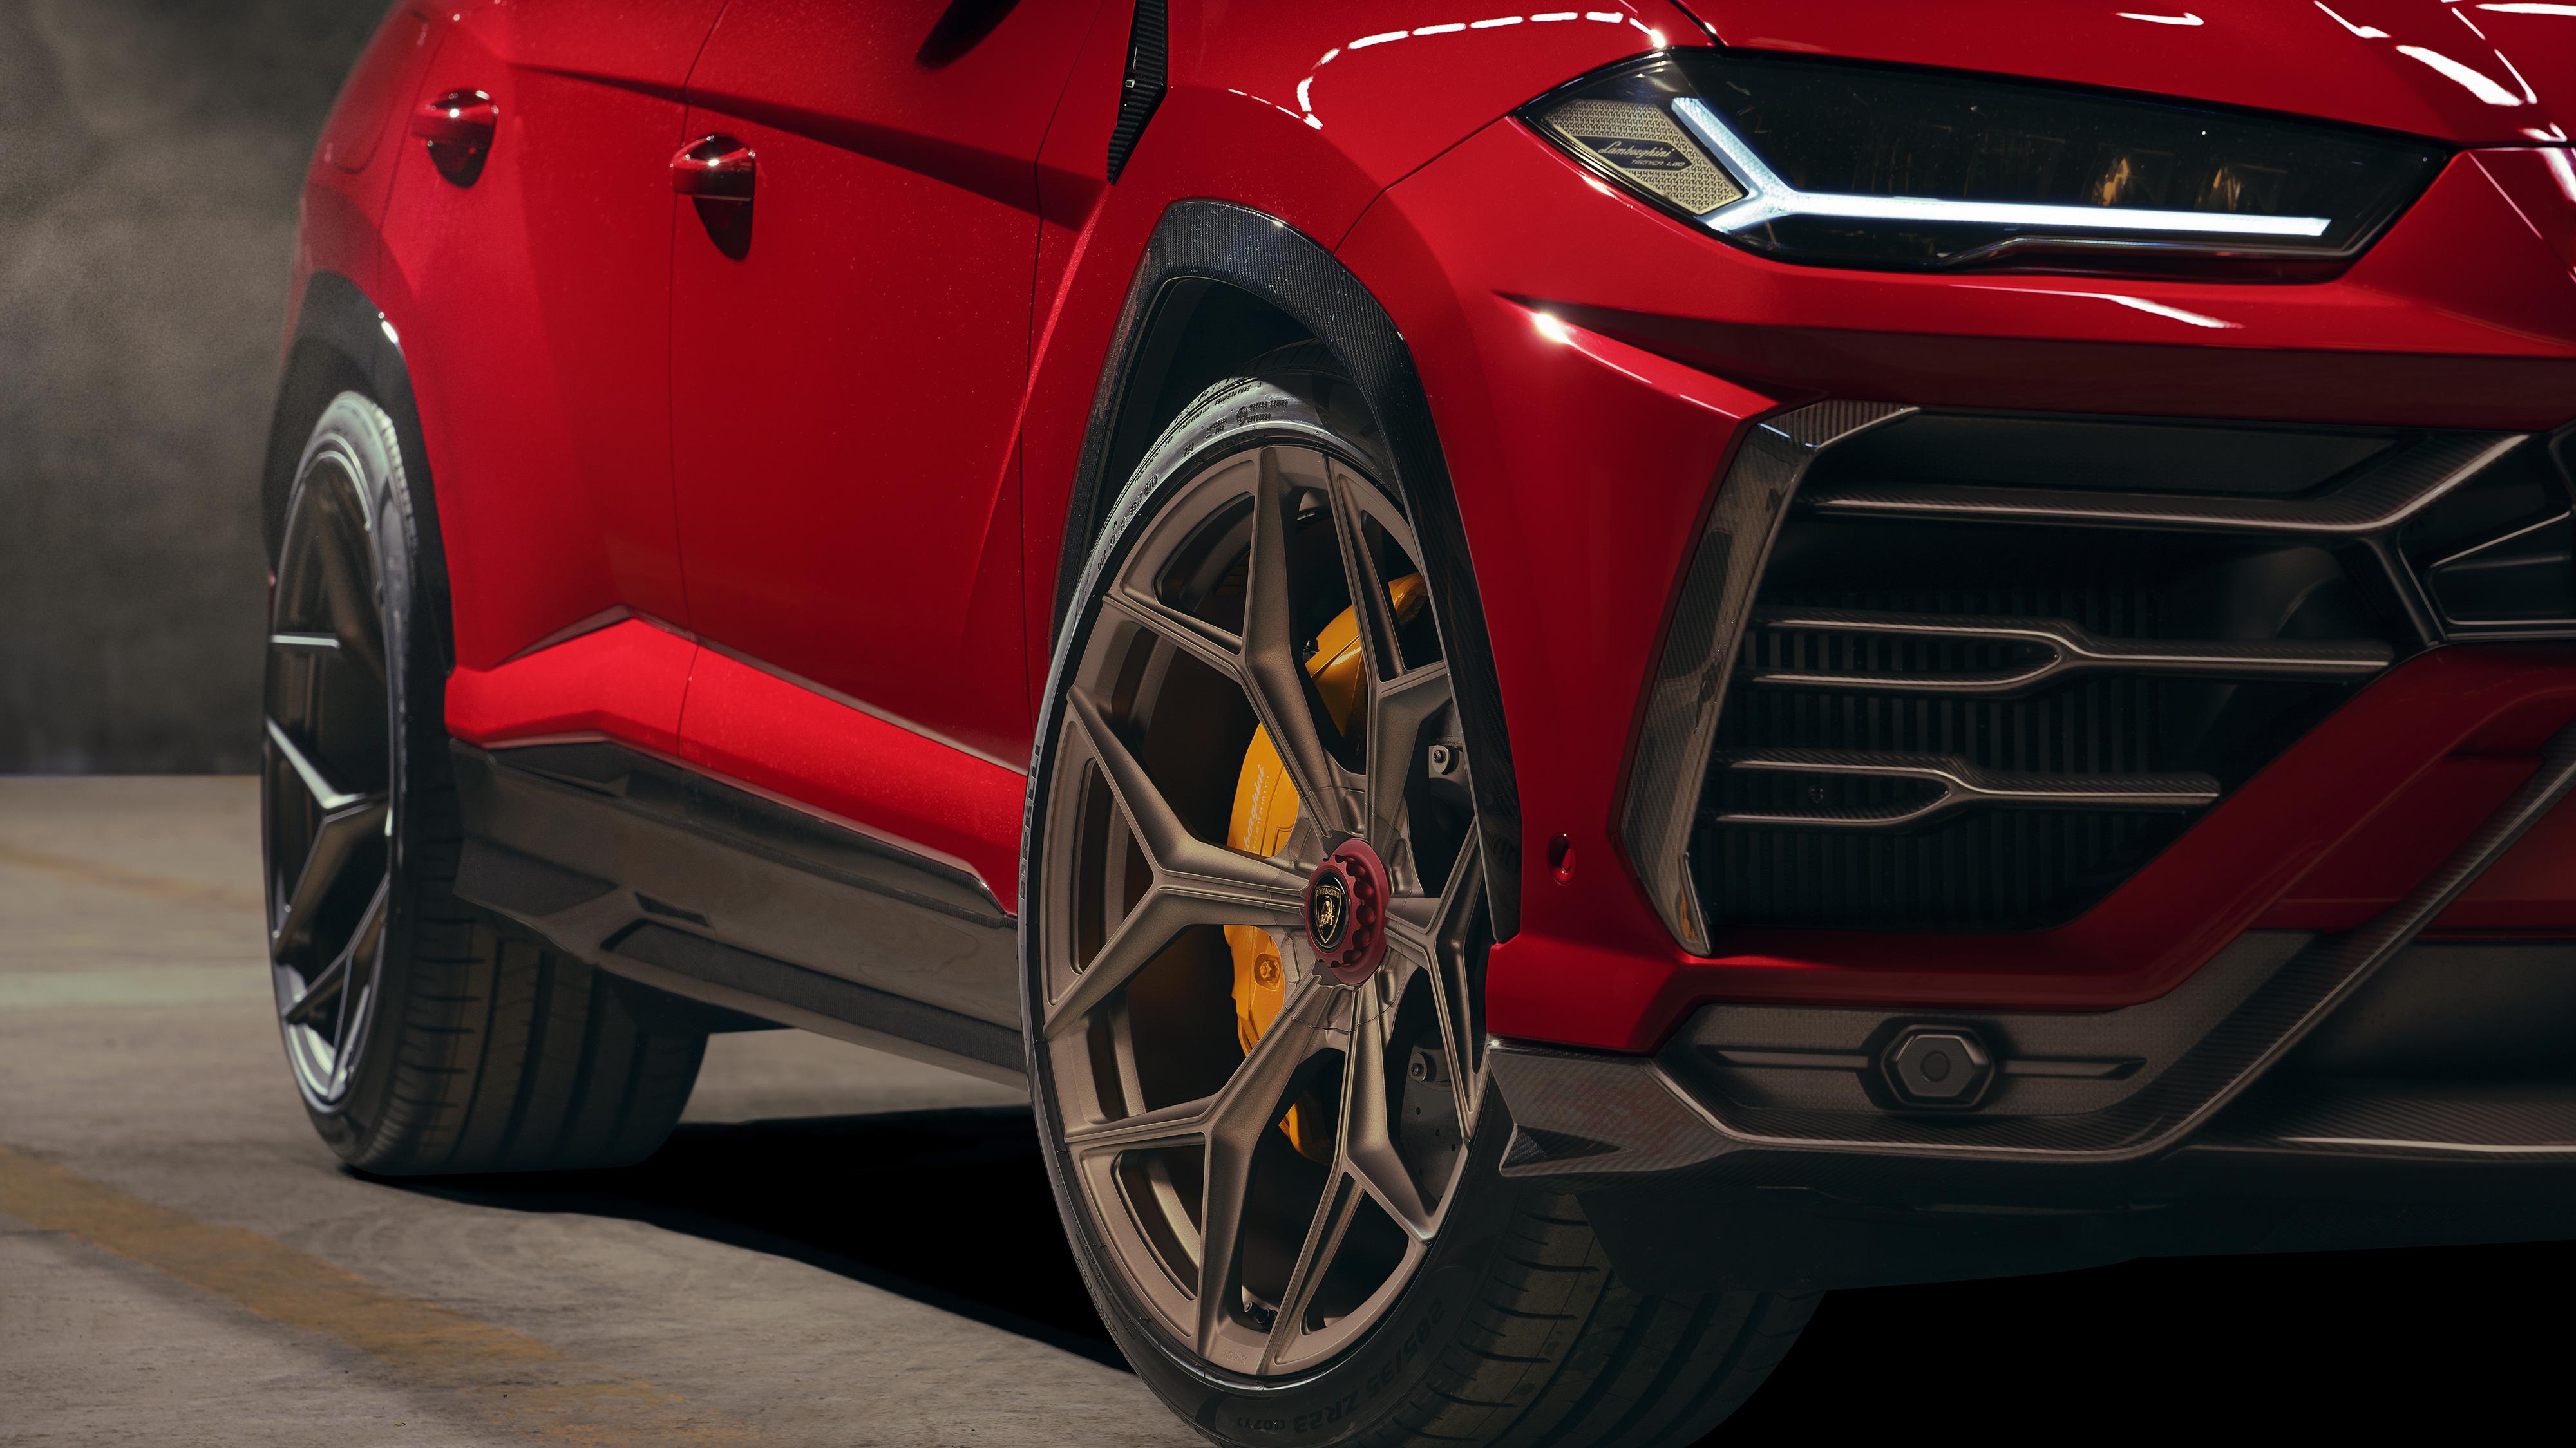 Wheels Of The Red Car Lamborghini Urus Desktop Wallpaper